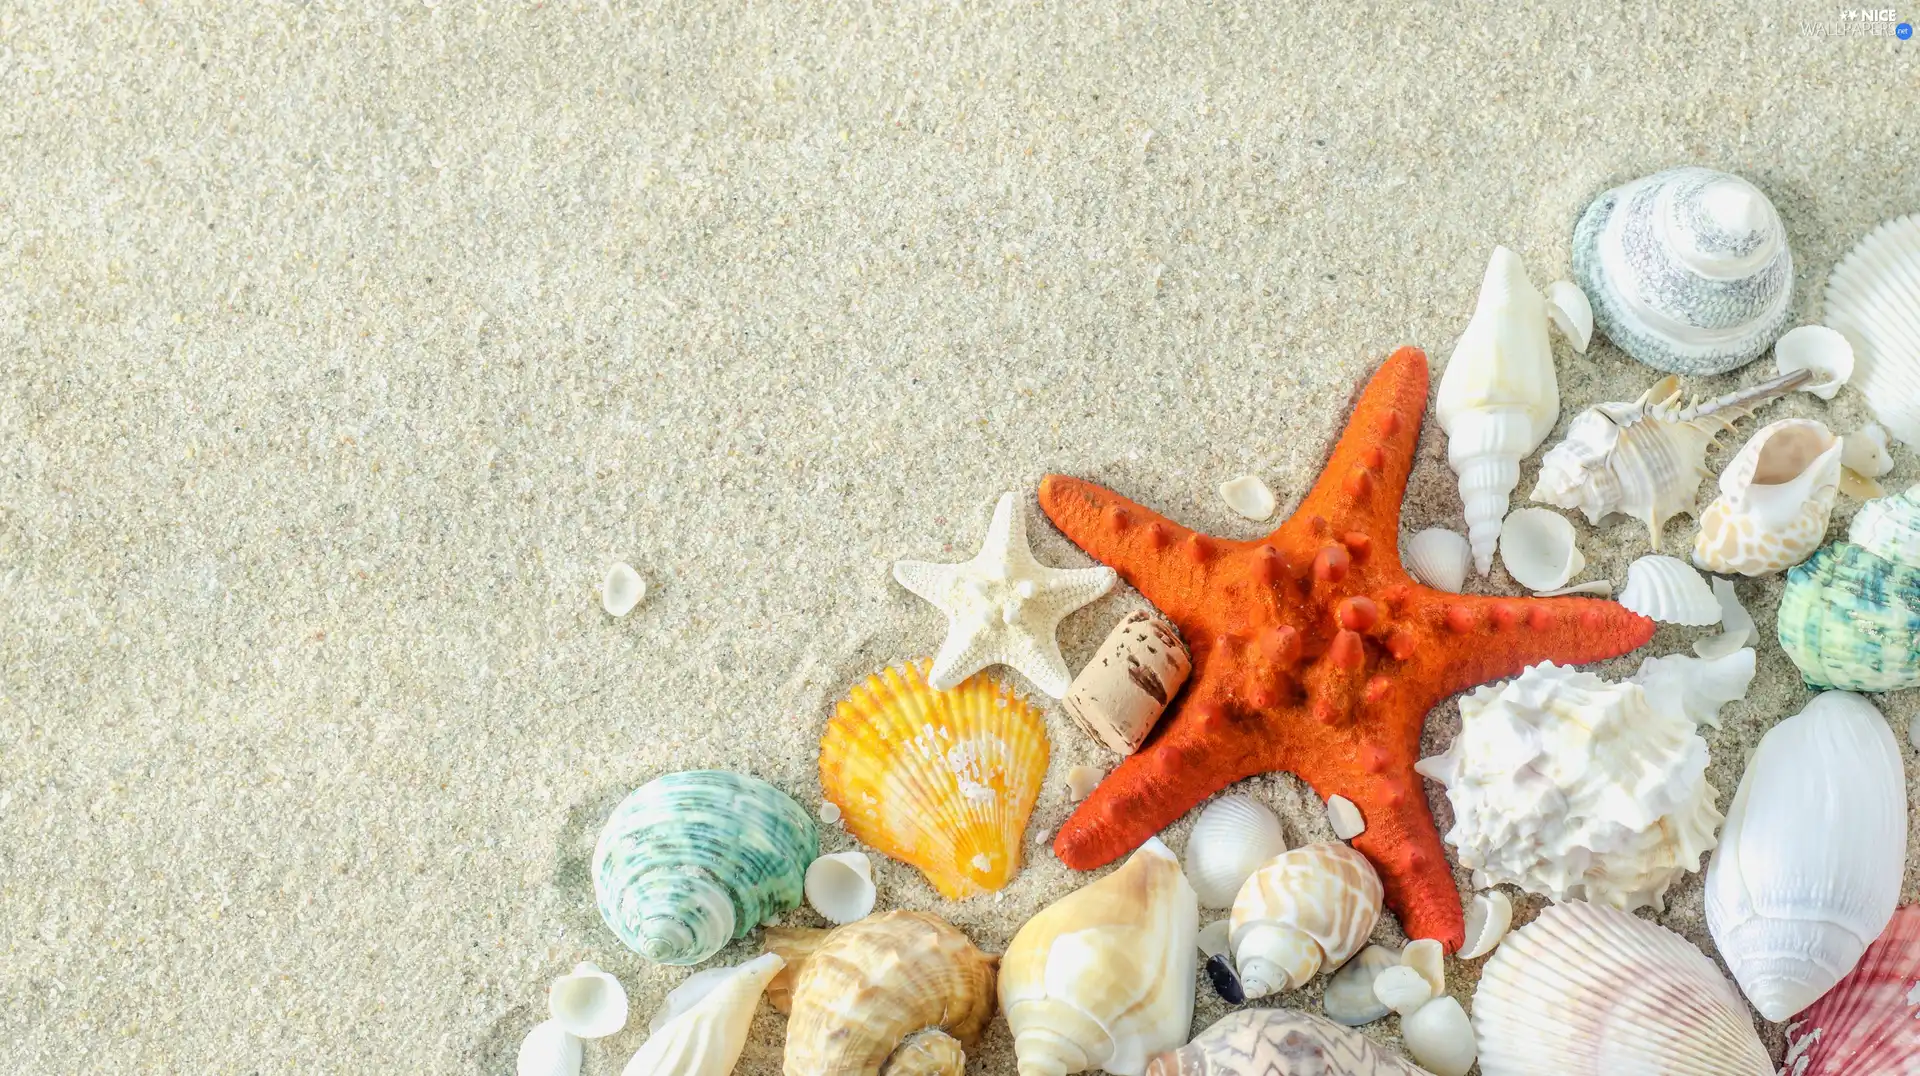 Sand, Shells, starfish